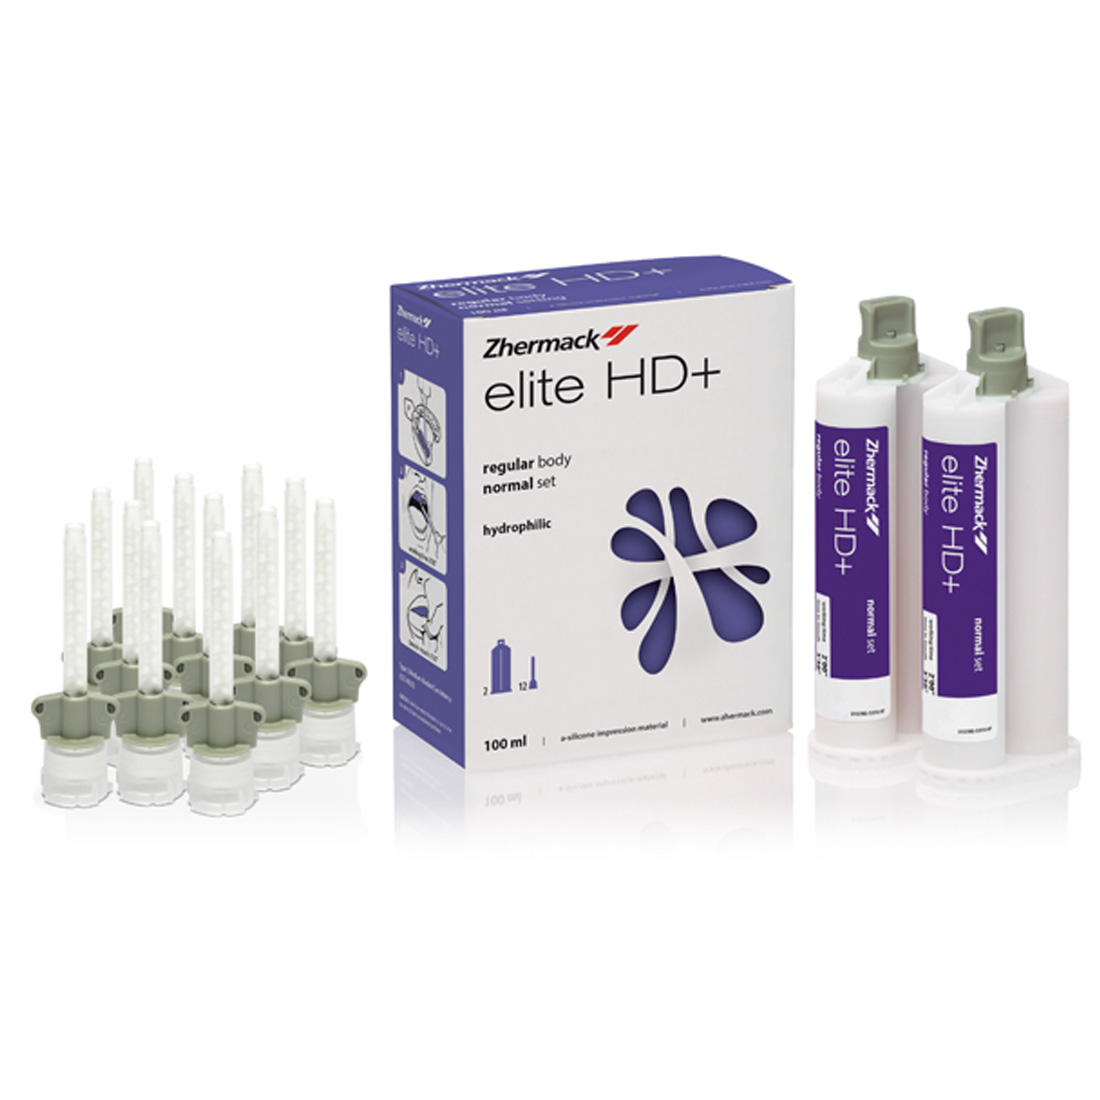 Elite®HD+ Impression Material Regular Body Normal Setting